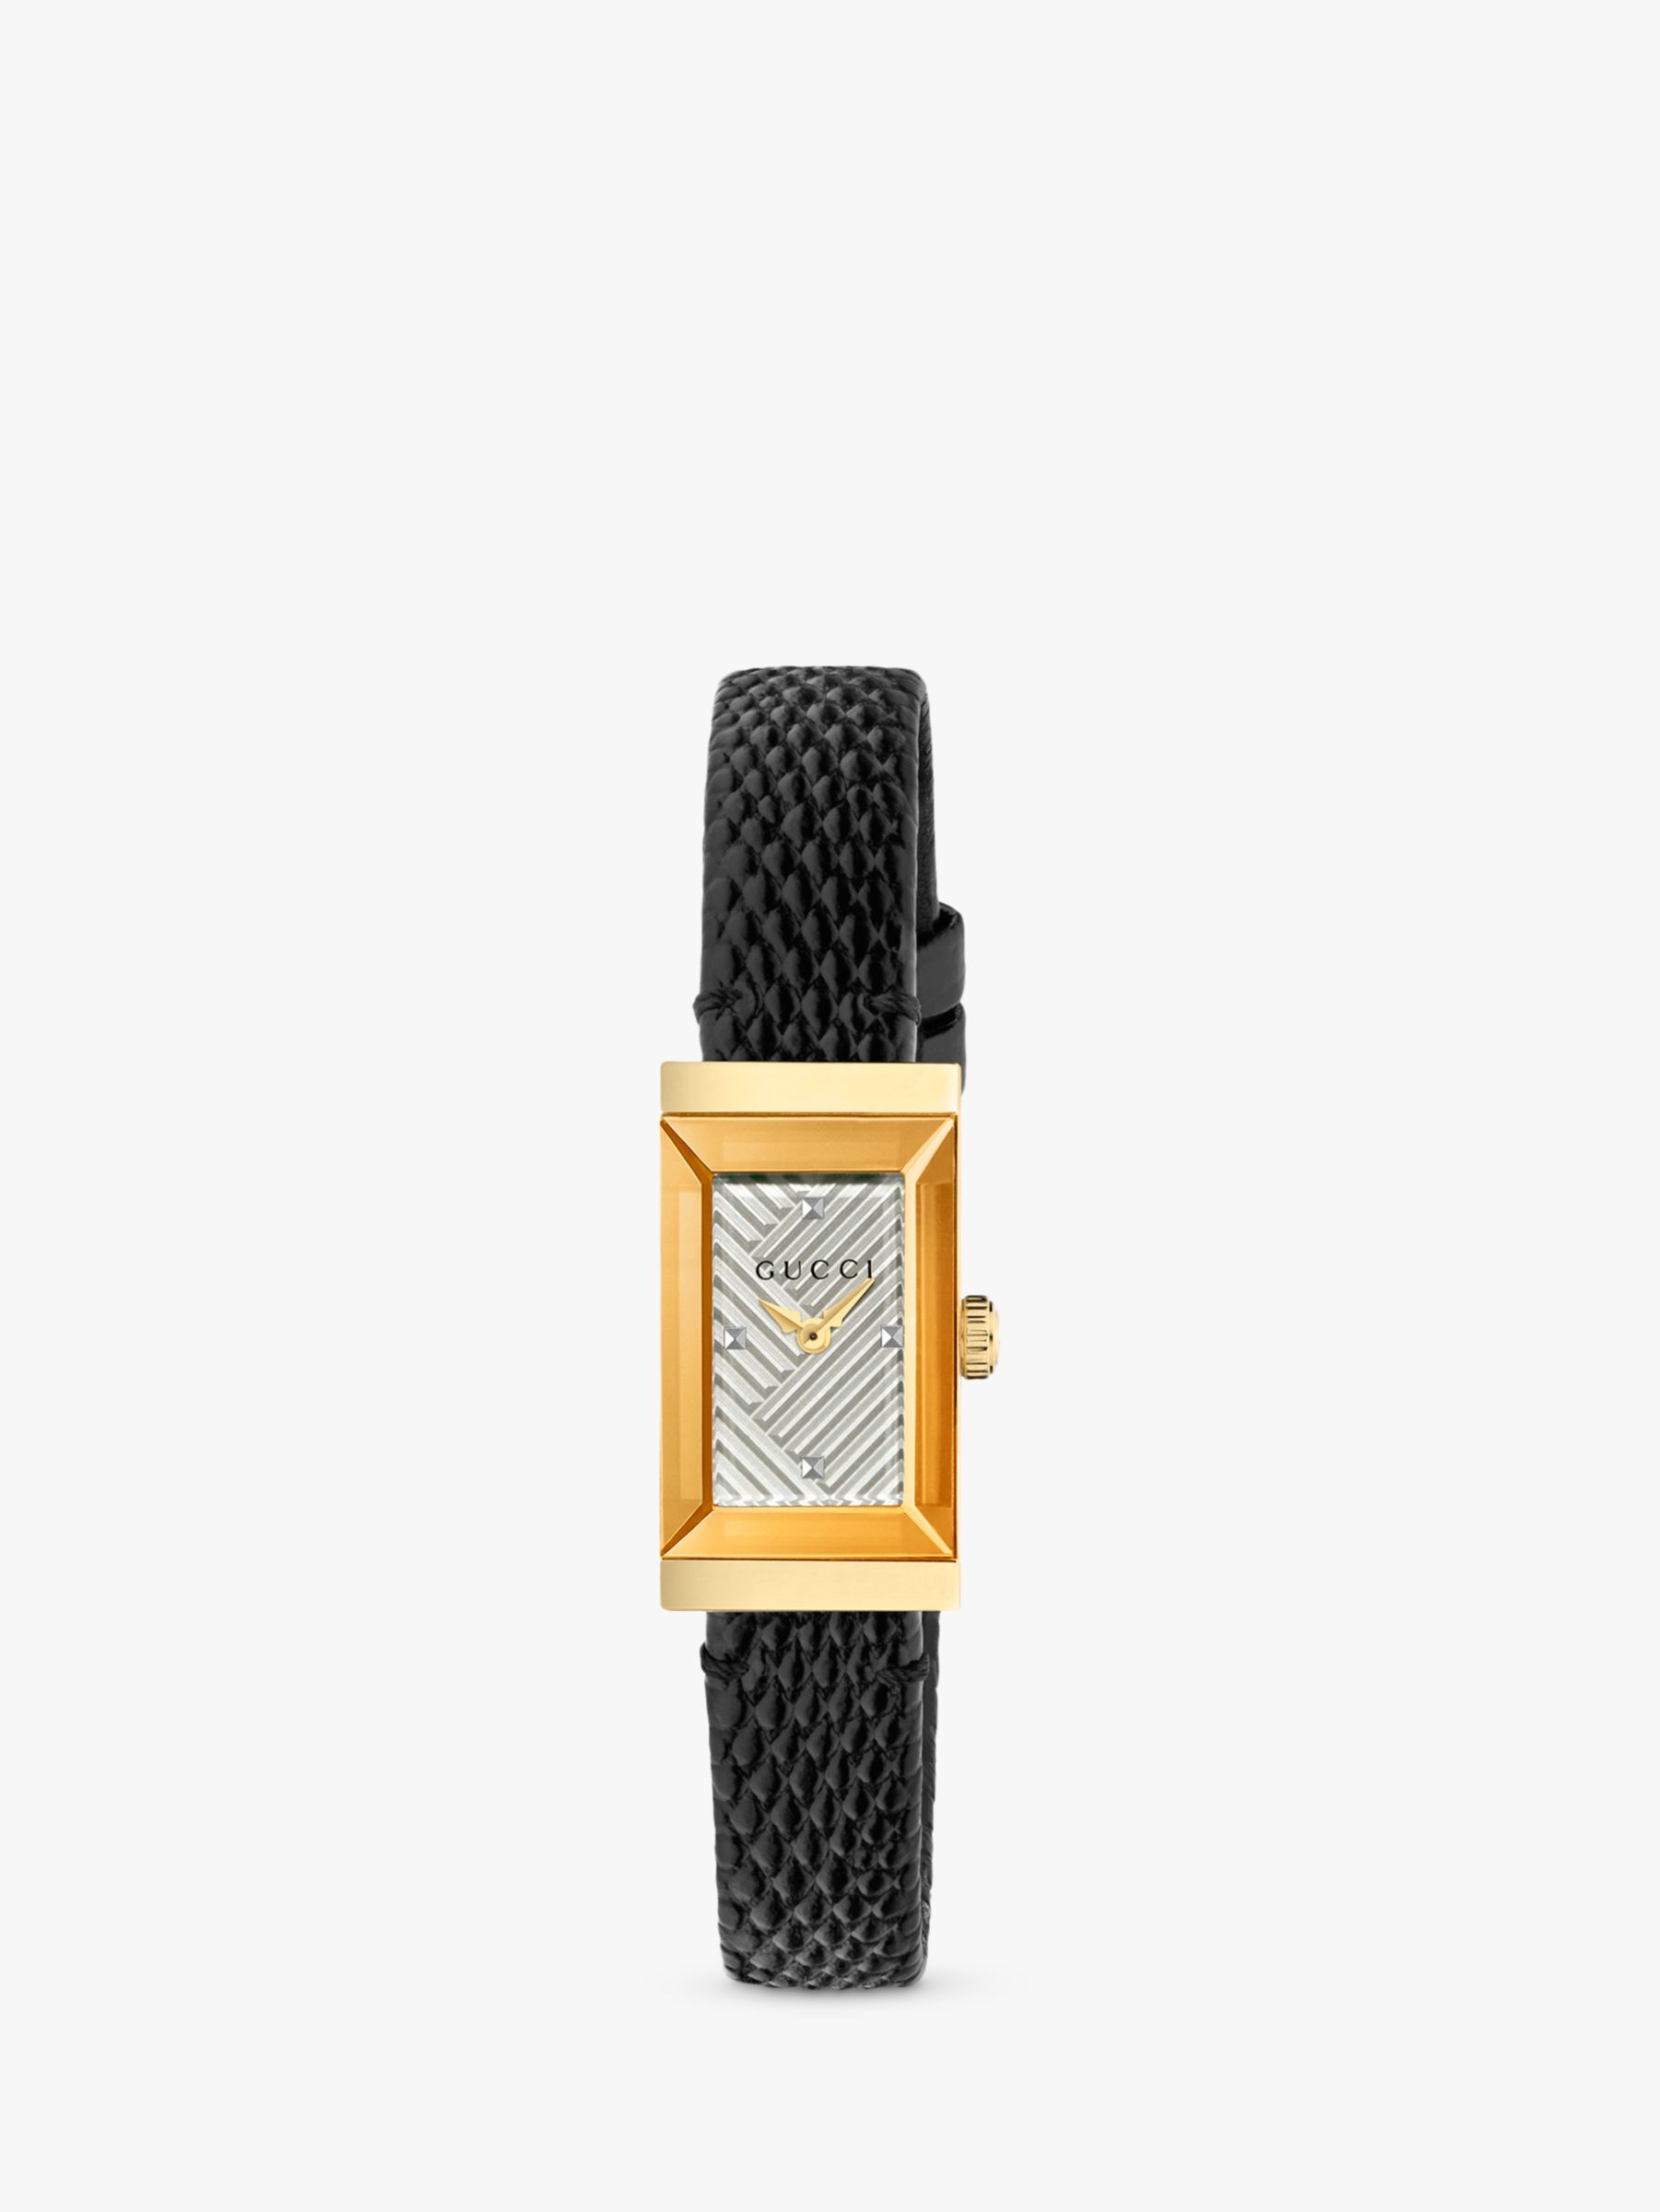 Gucci YA147507 Women's G-Frame Rectangular Leather Strap Watch, Black/White